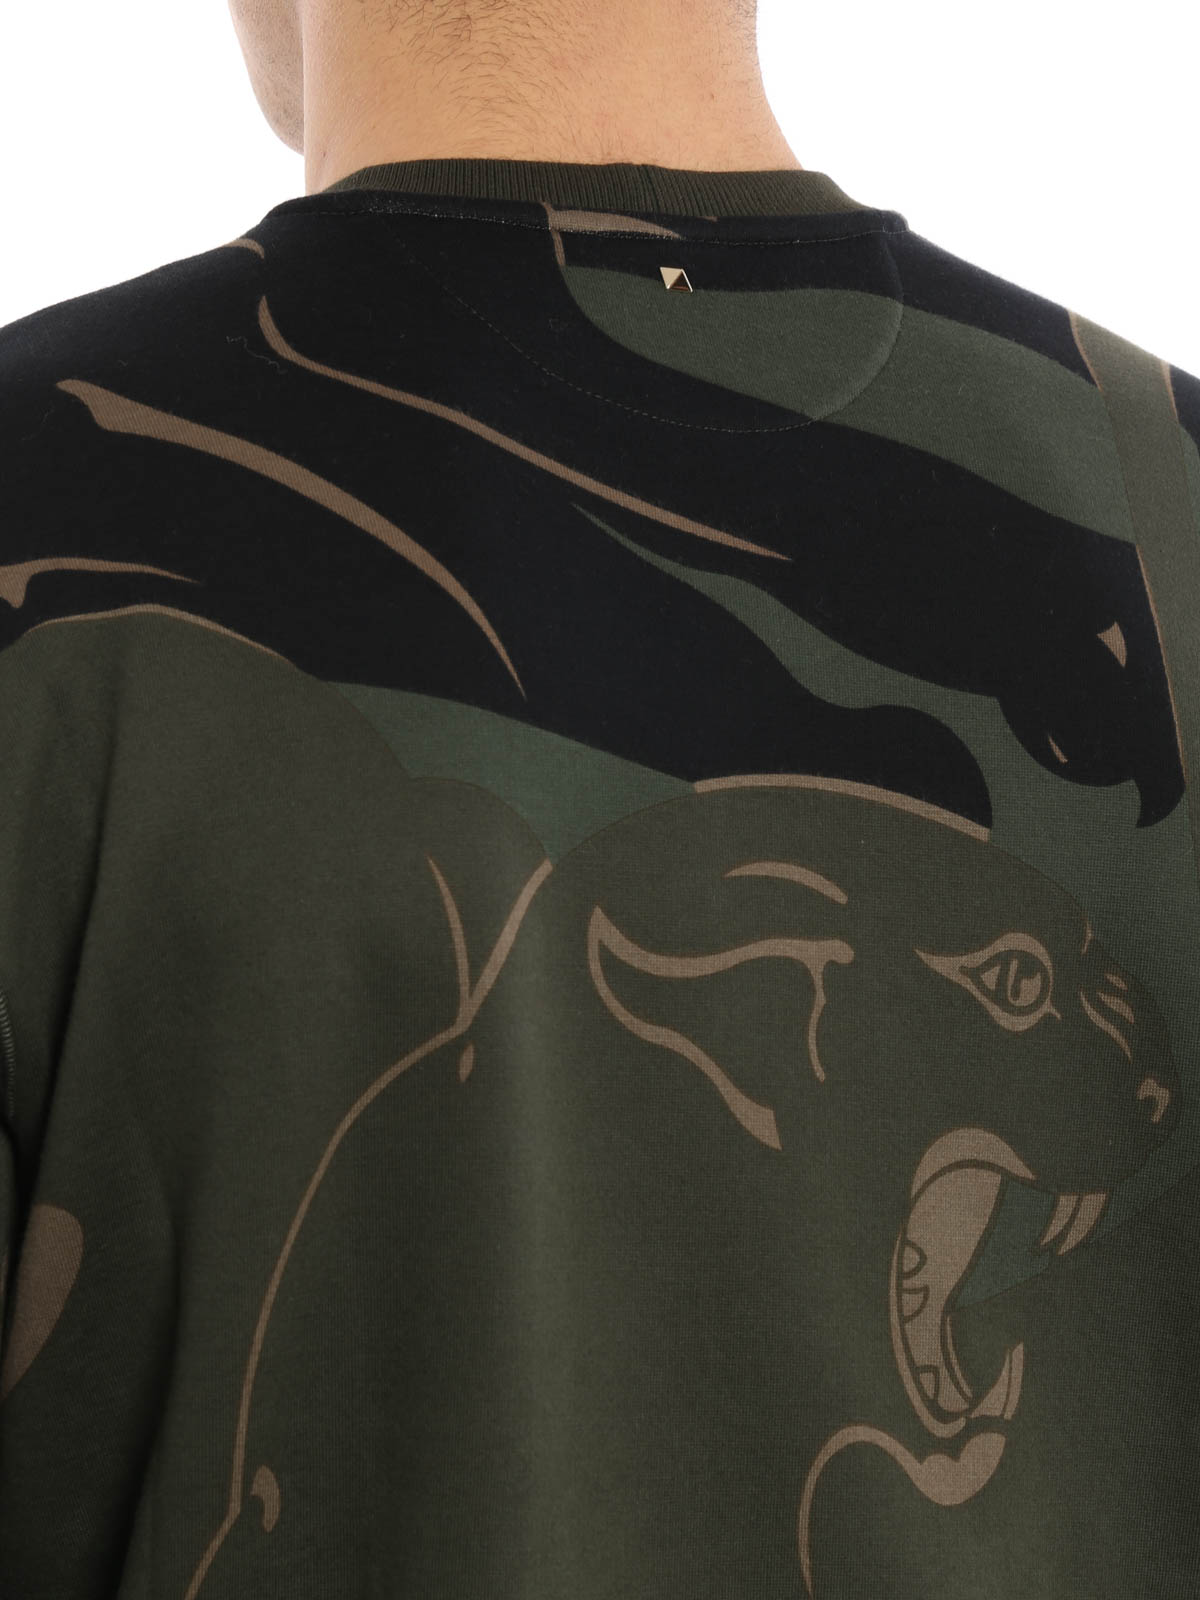 Empirisk linse Mary Sweatshirts & Sweaters Valentino - Camu Panther printed sweatshirt -  MV0MF03U4B9FT0